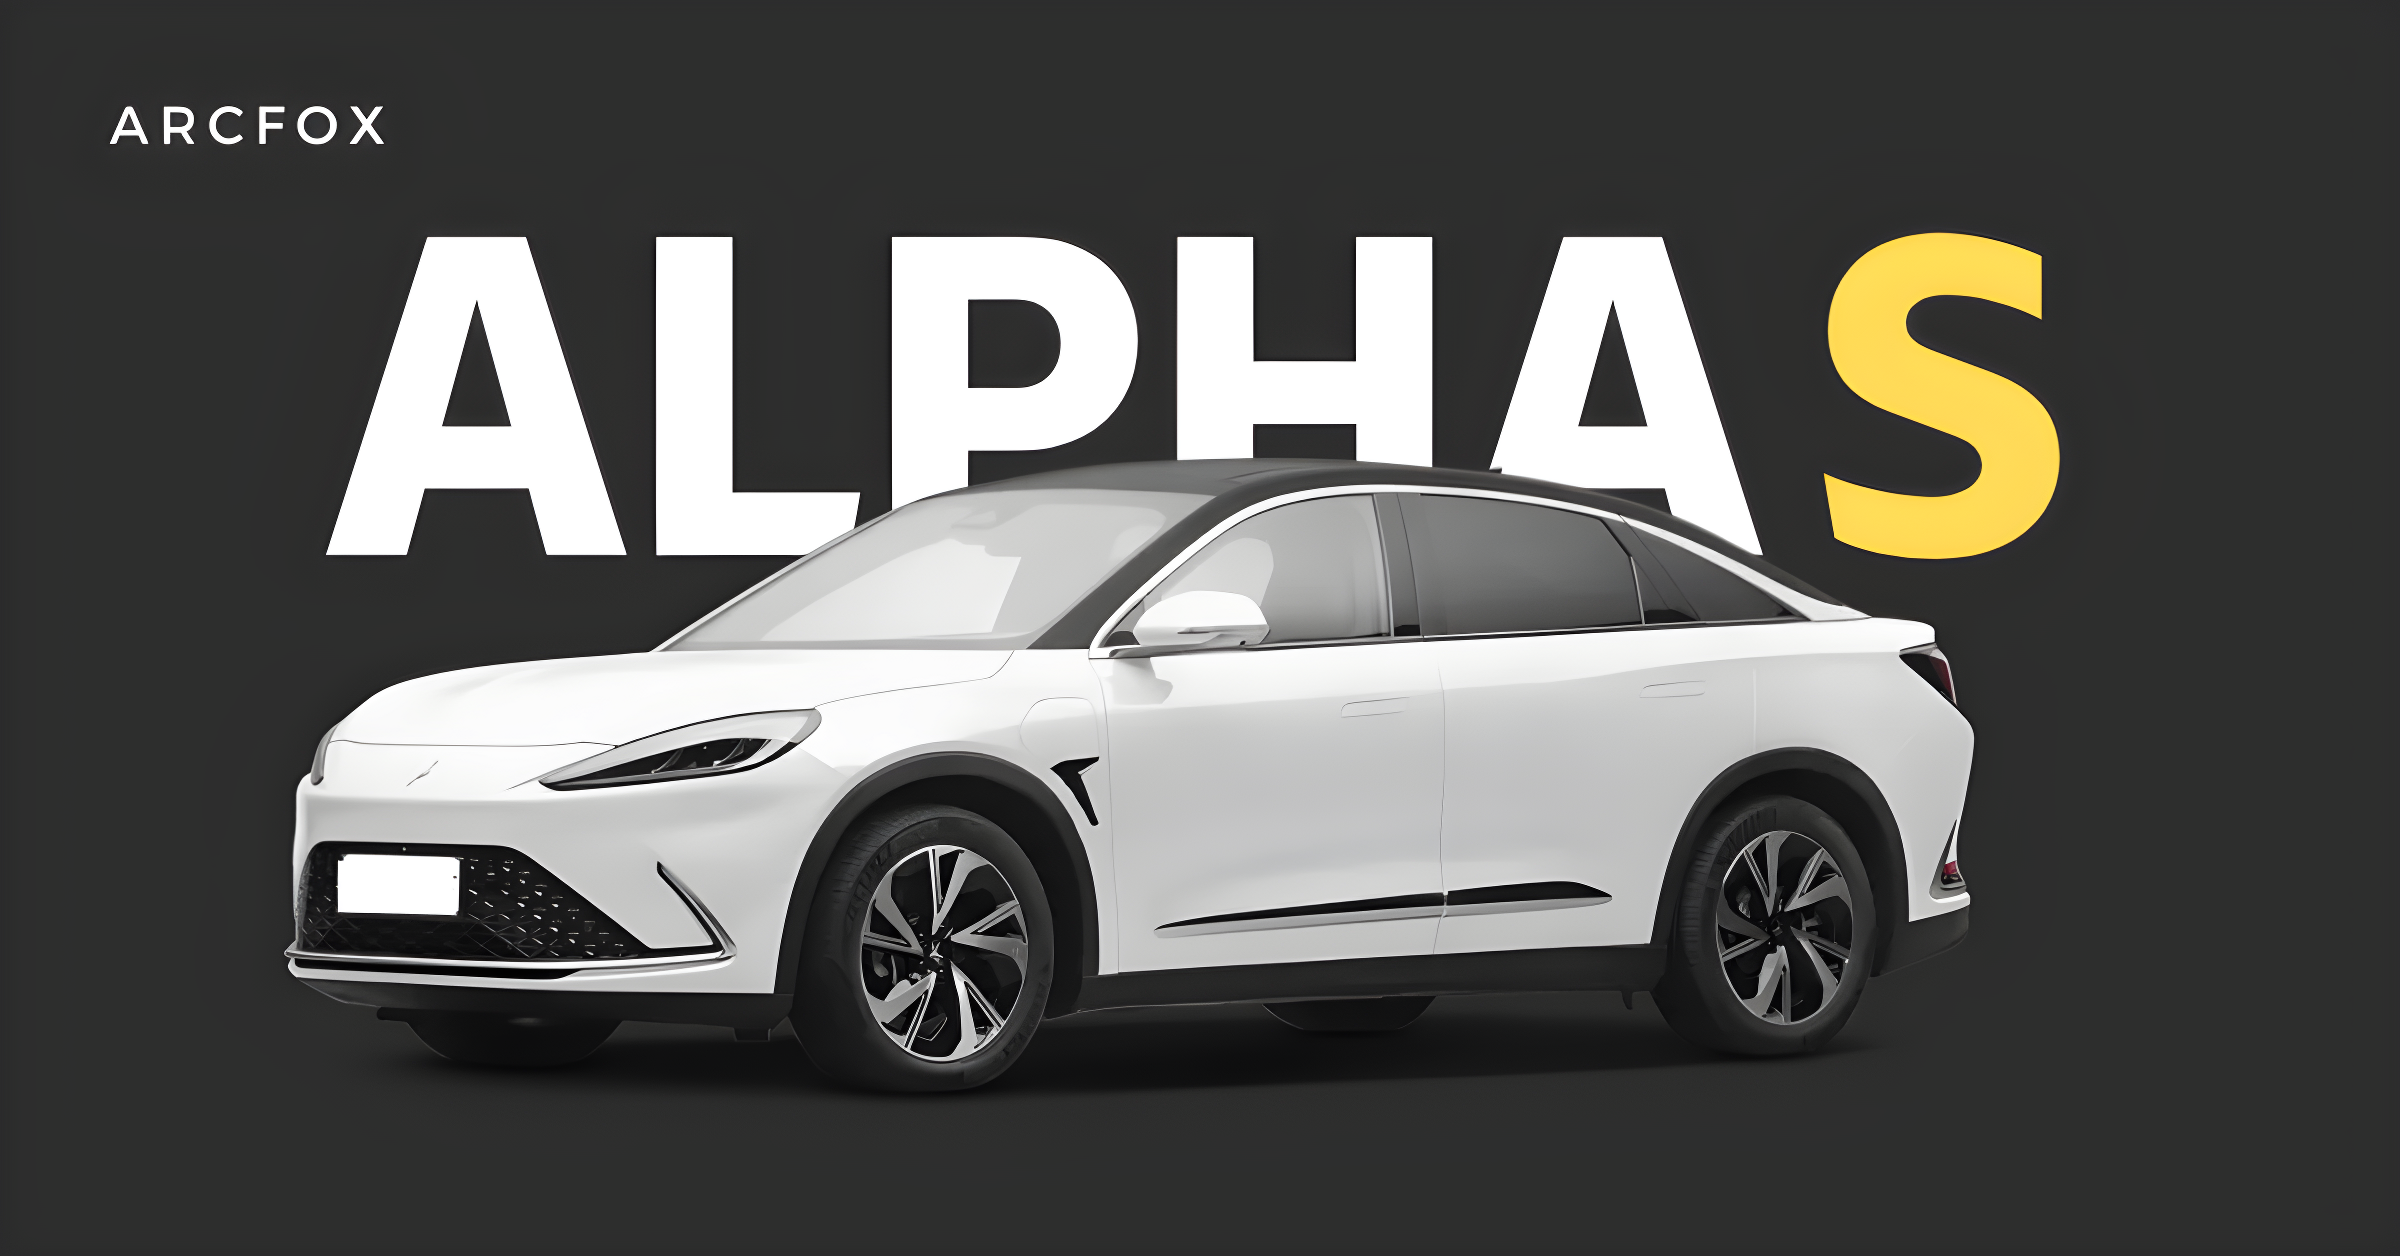 https://e-vehicleinfo.com/global/arcfox-alpha-s-electric-car/